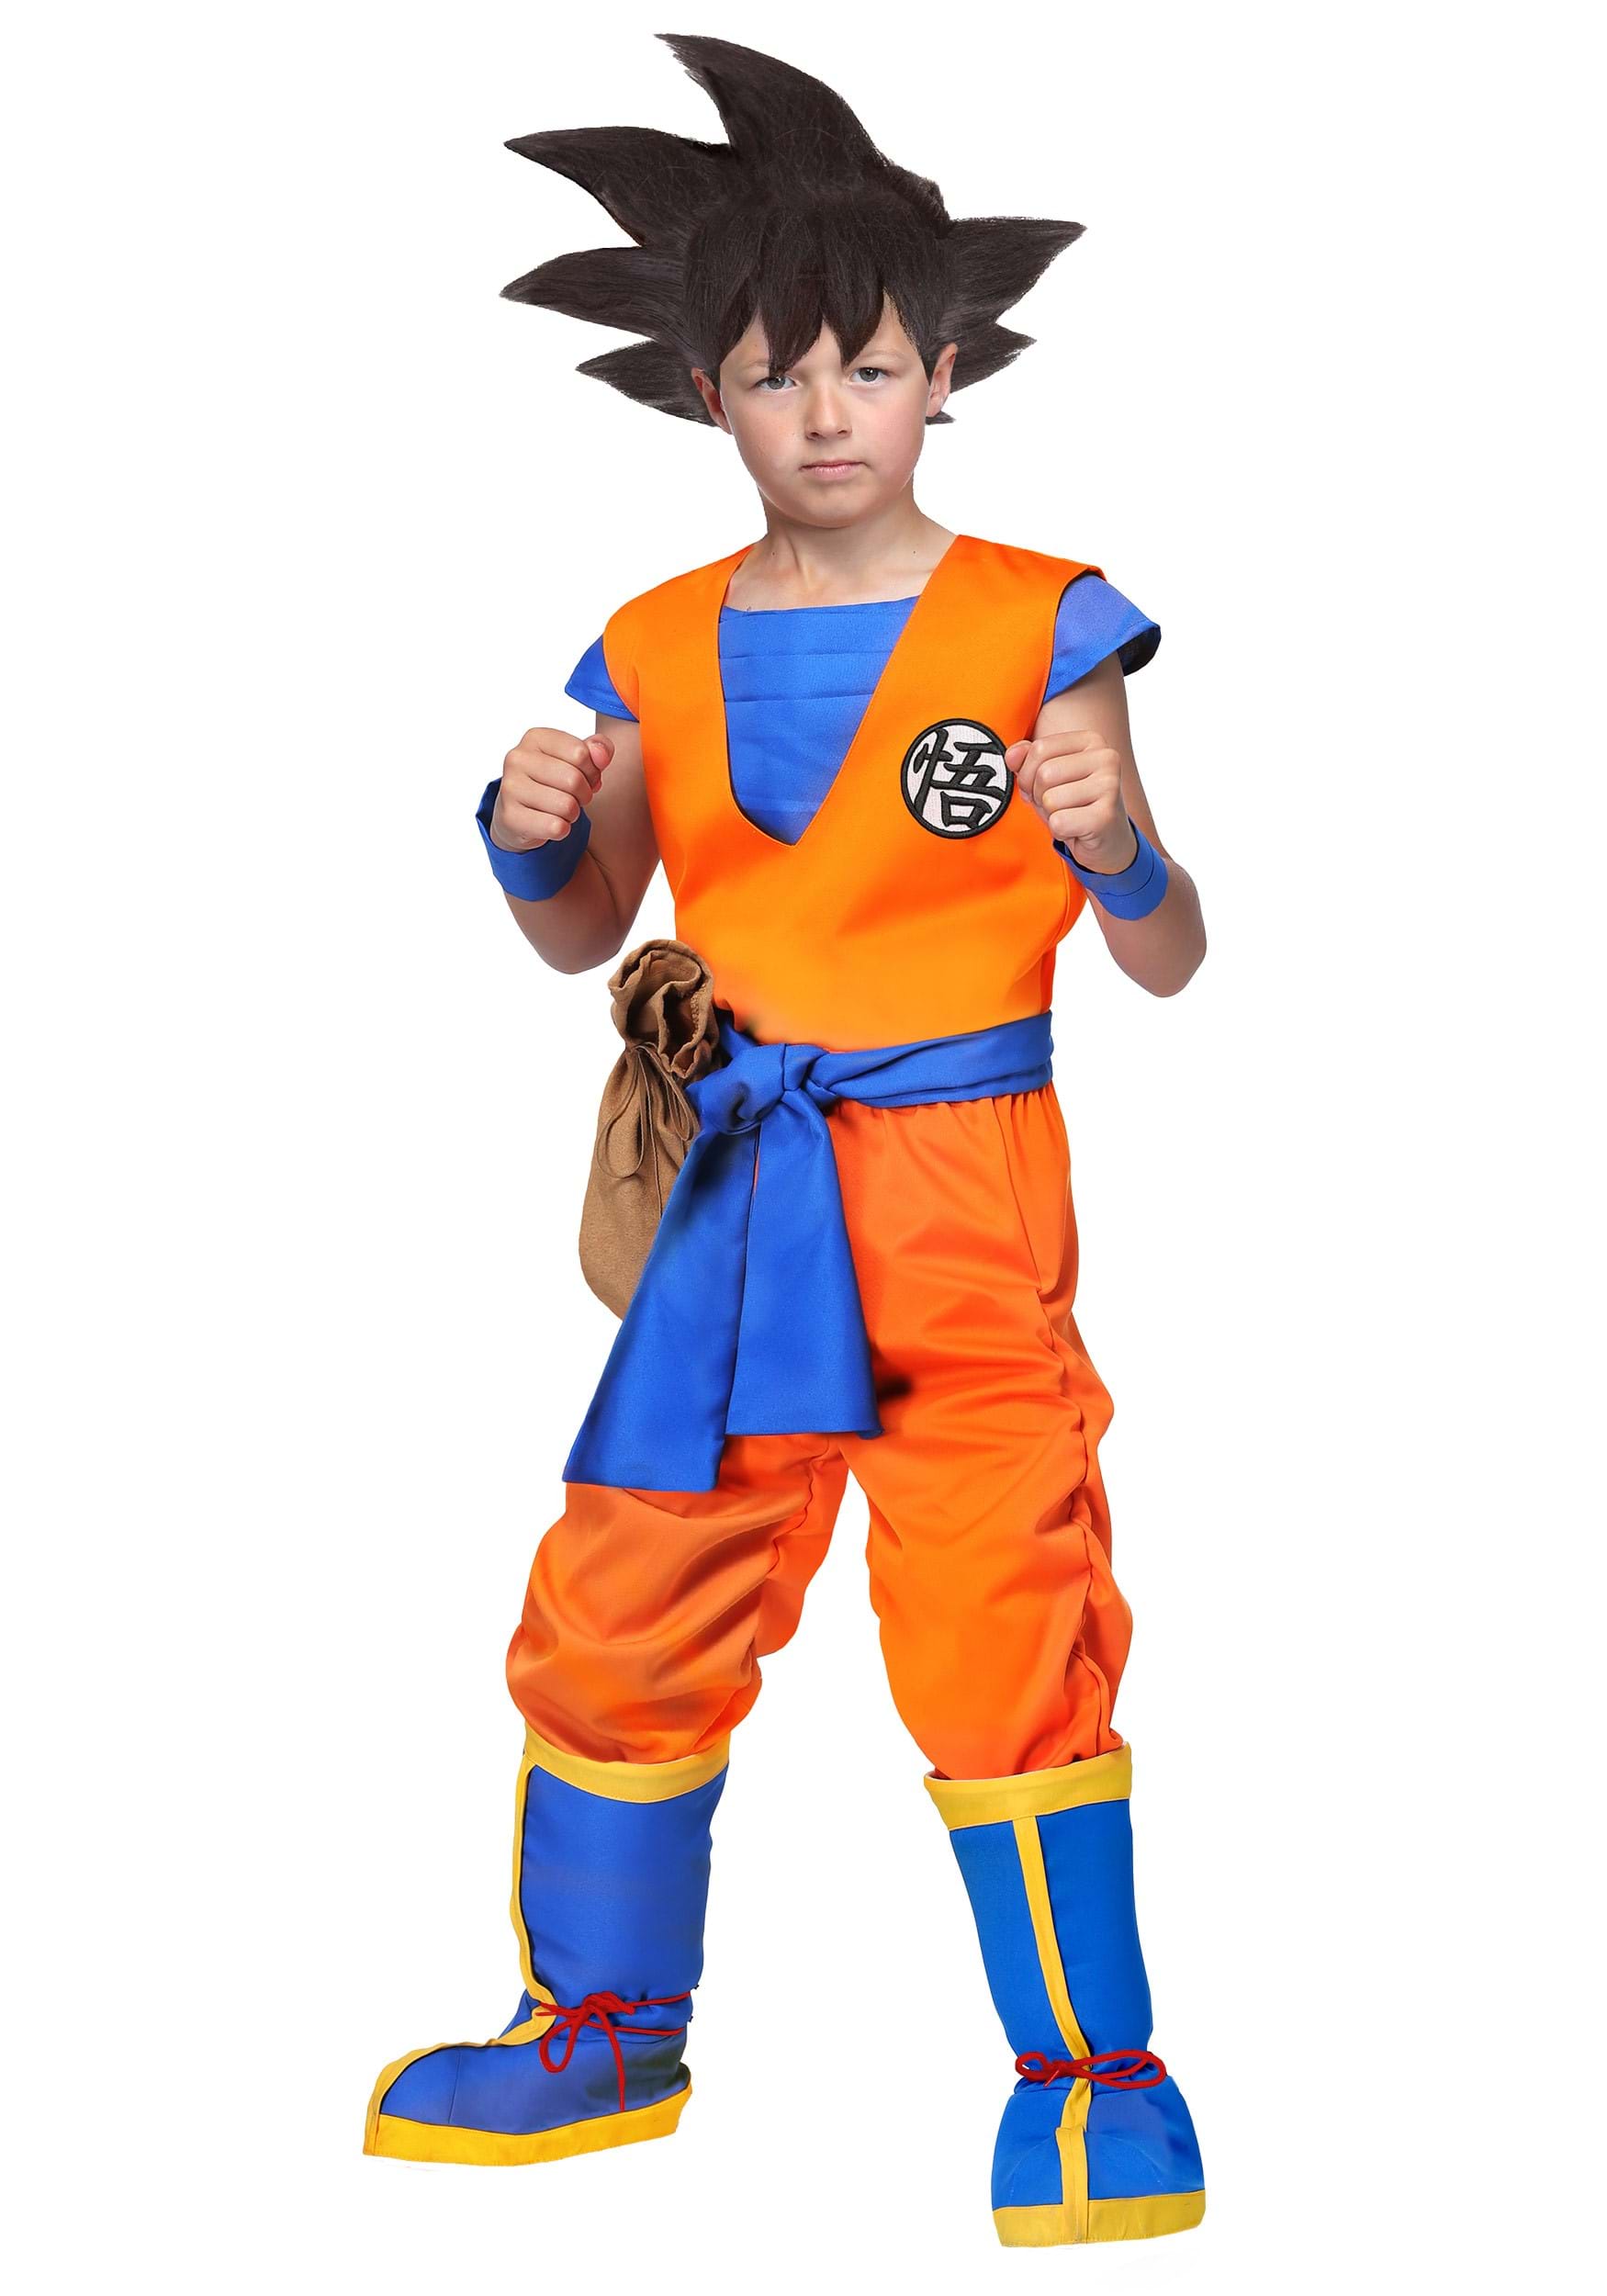 Photos - Fancy Dress Dragon FUN Costumes  Ball Z Authentic Goku Costume for Kids |  Ball Z 